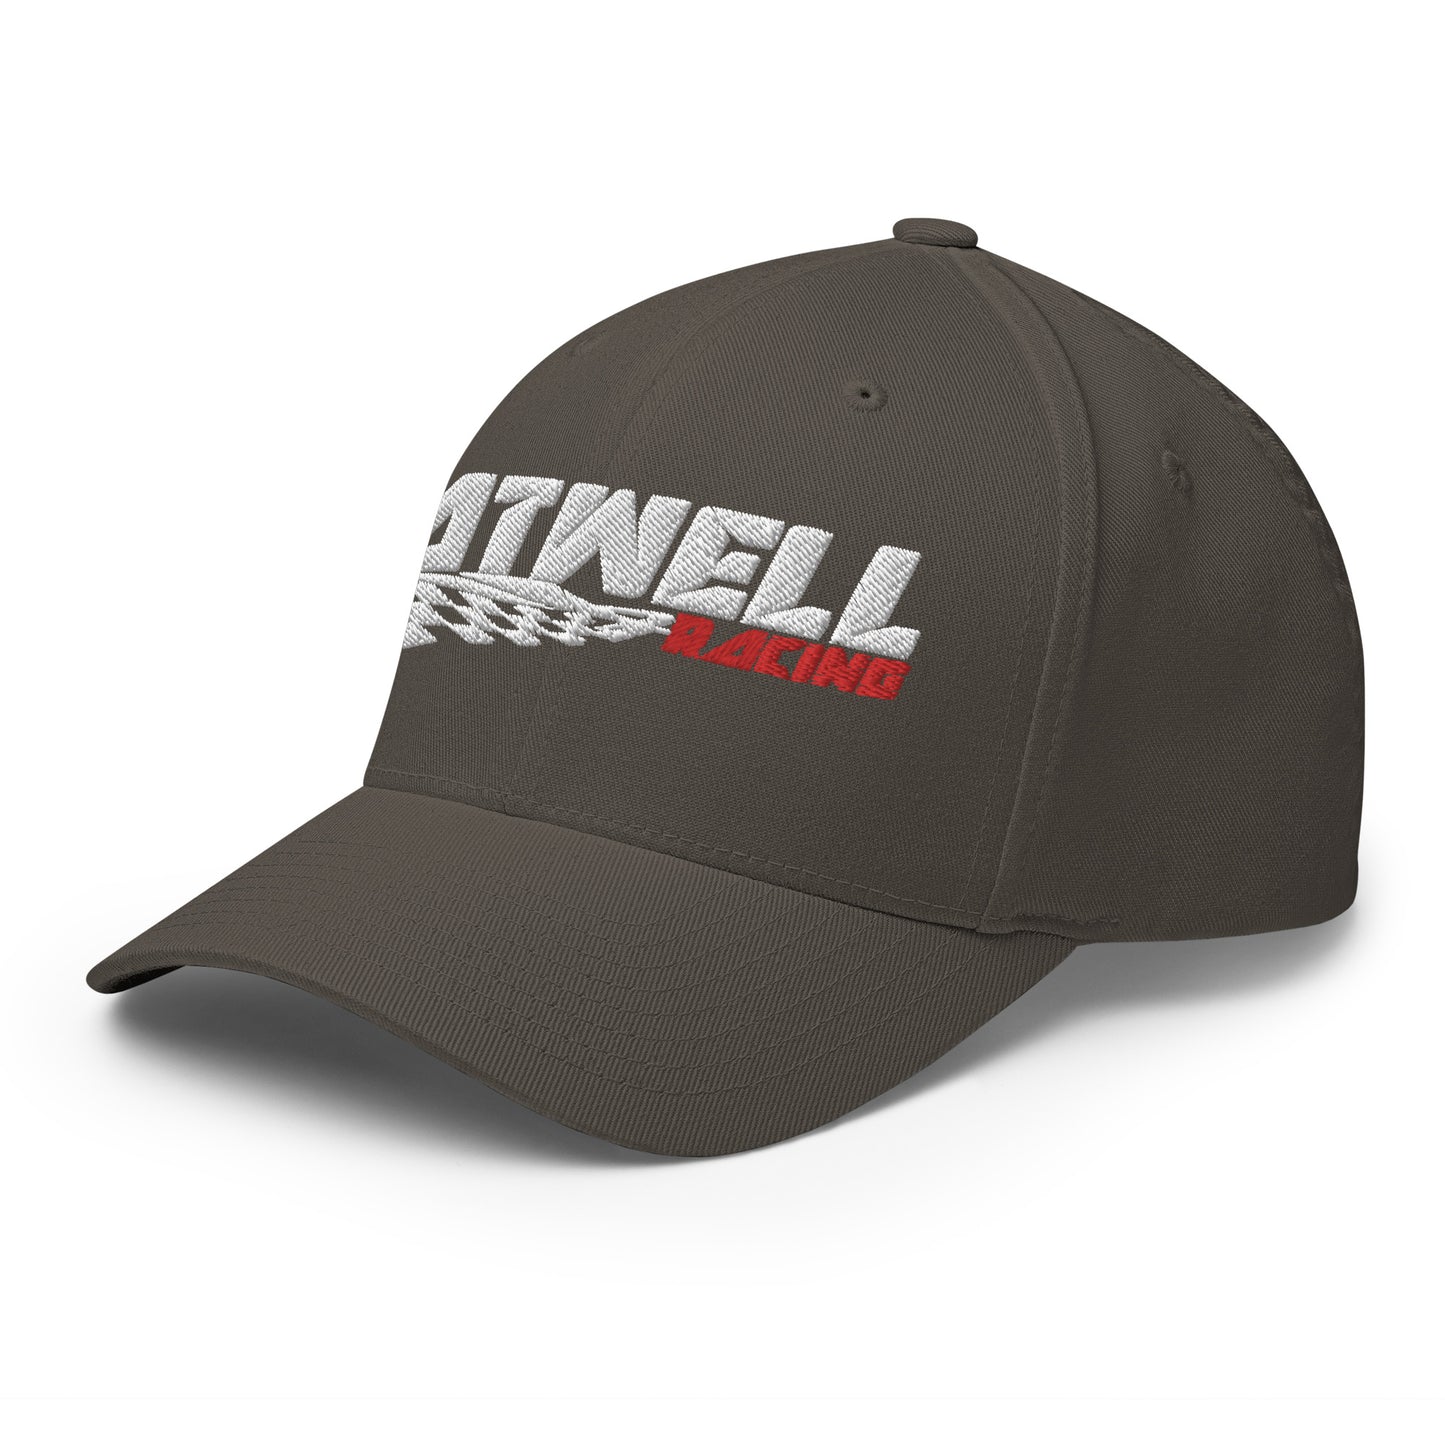 Atwell Racing Flex Fit Hat